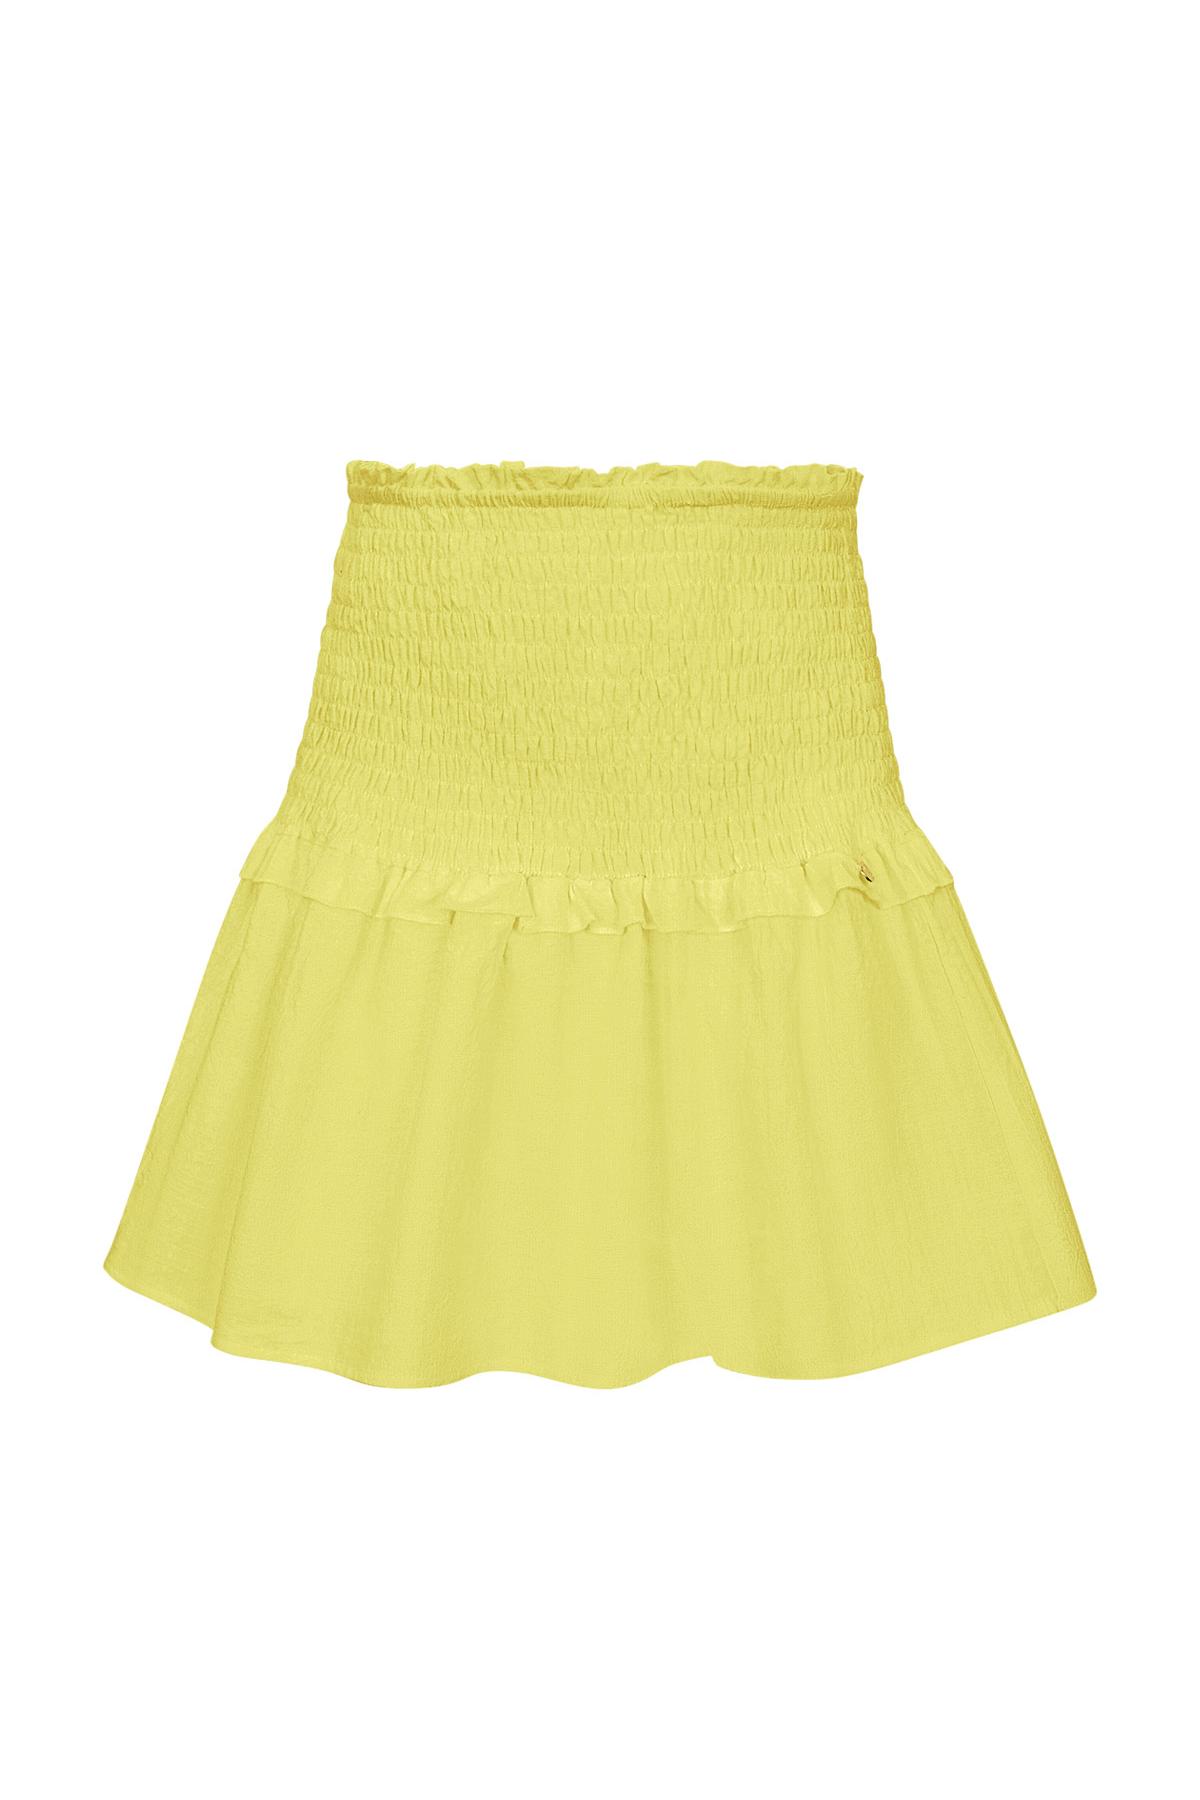 Detalle falda evasé - amarillo S 